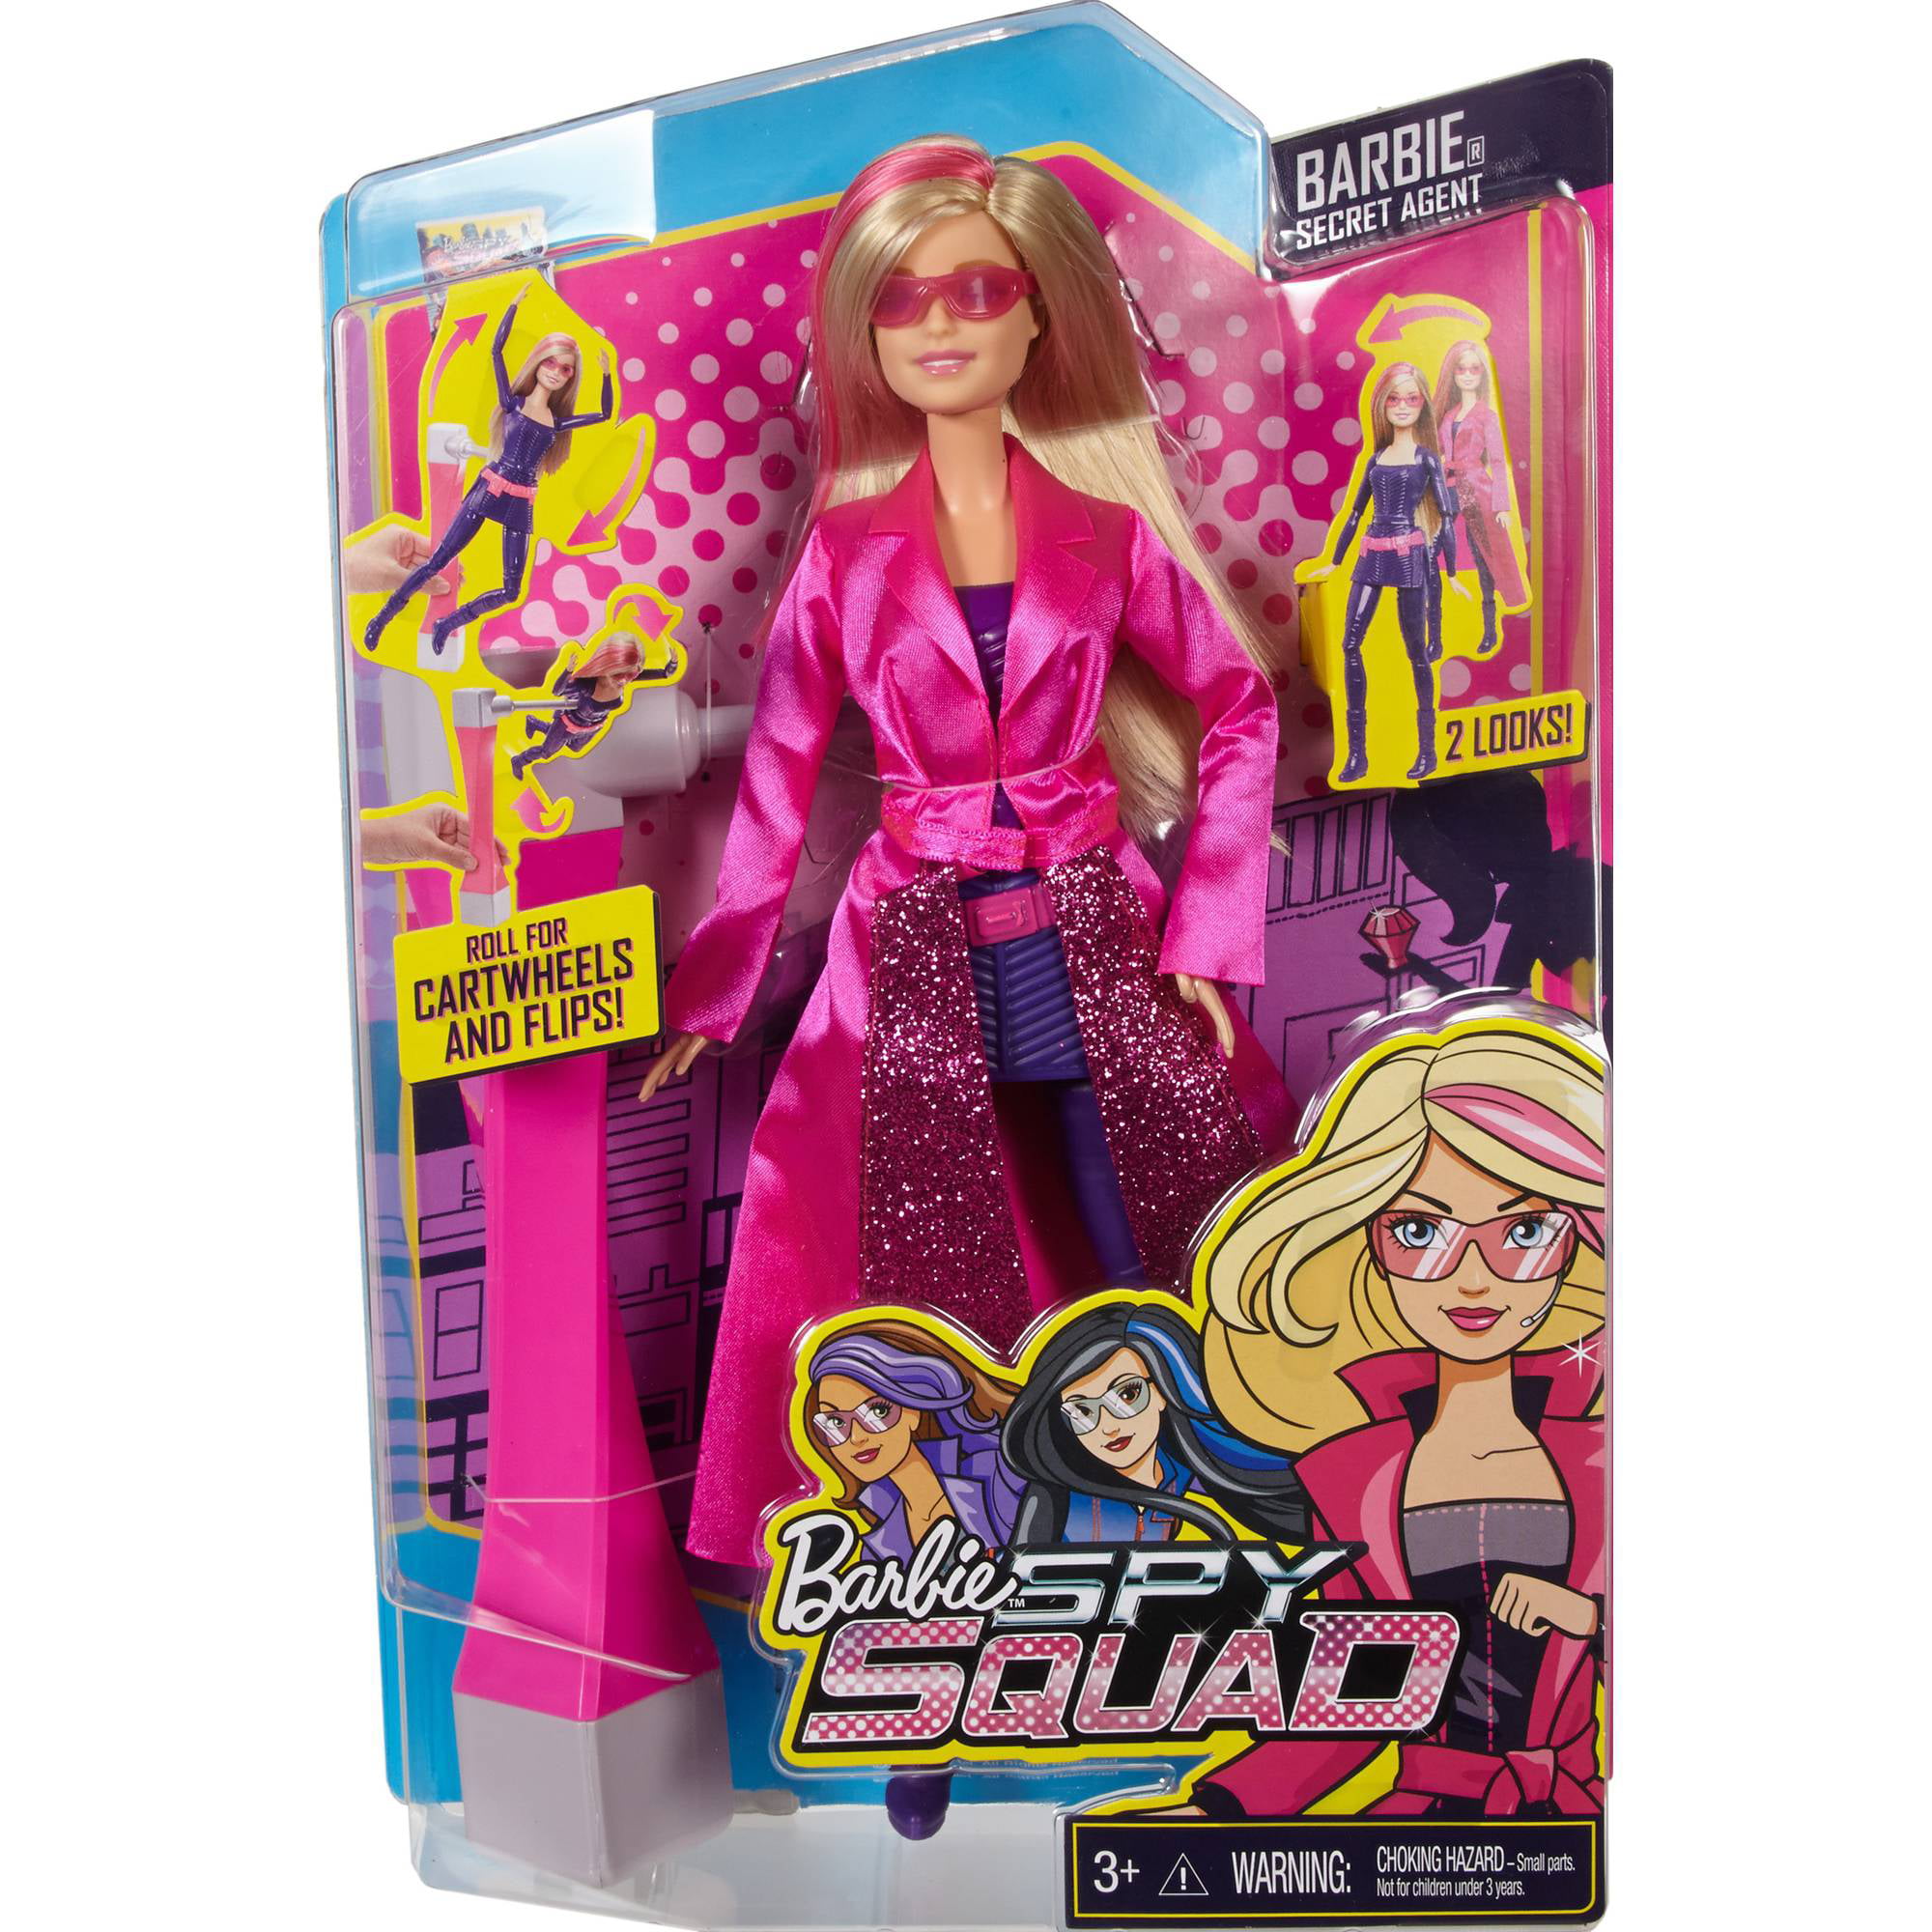 barbie spy squad